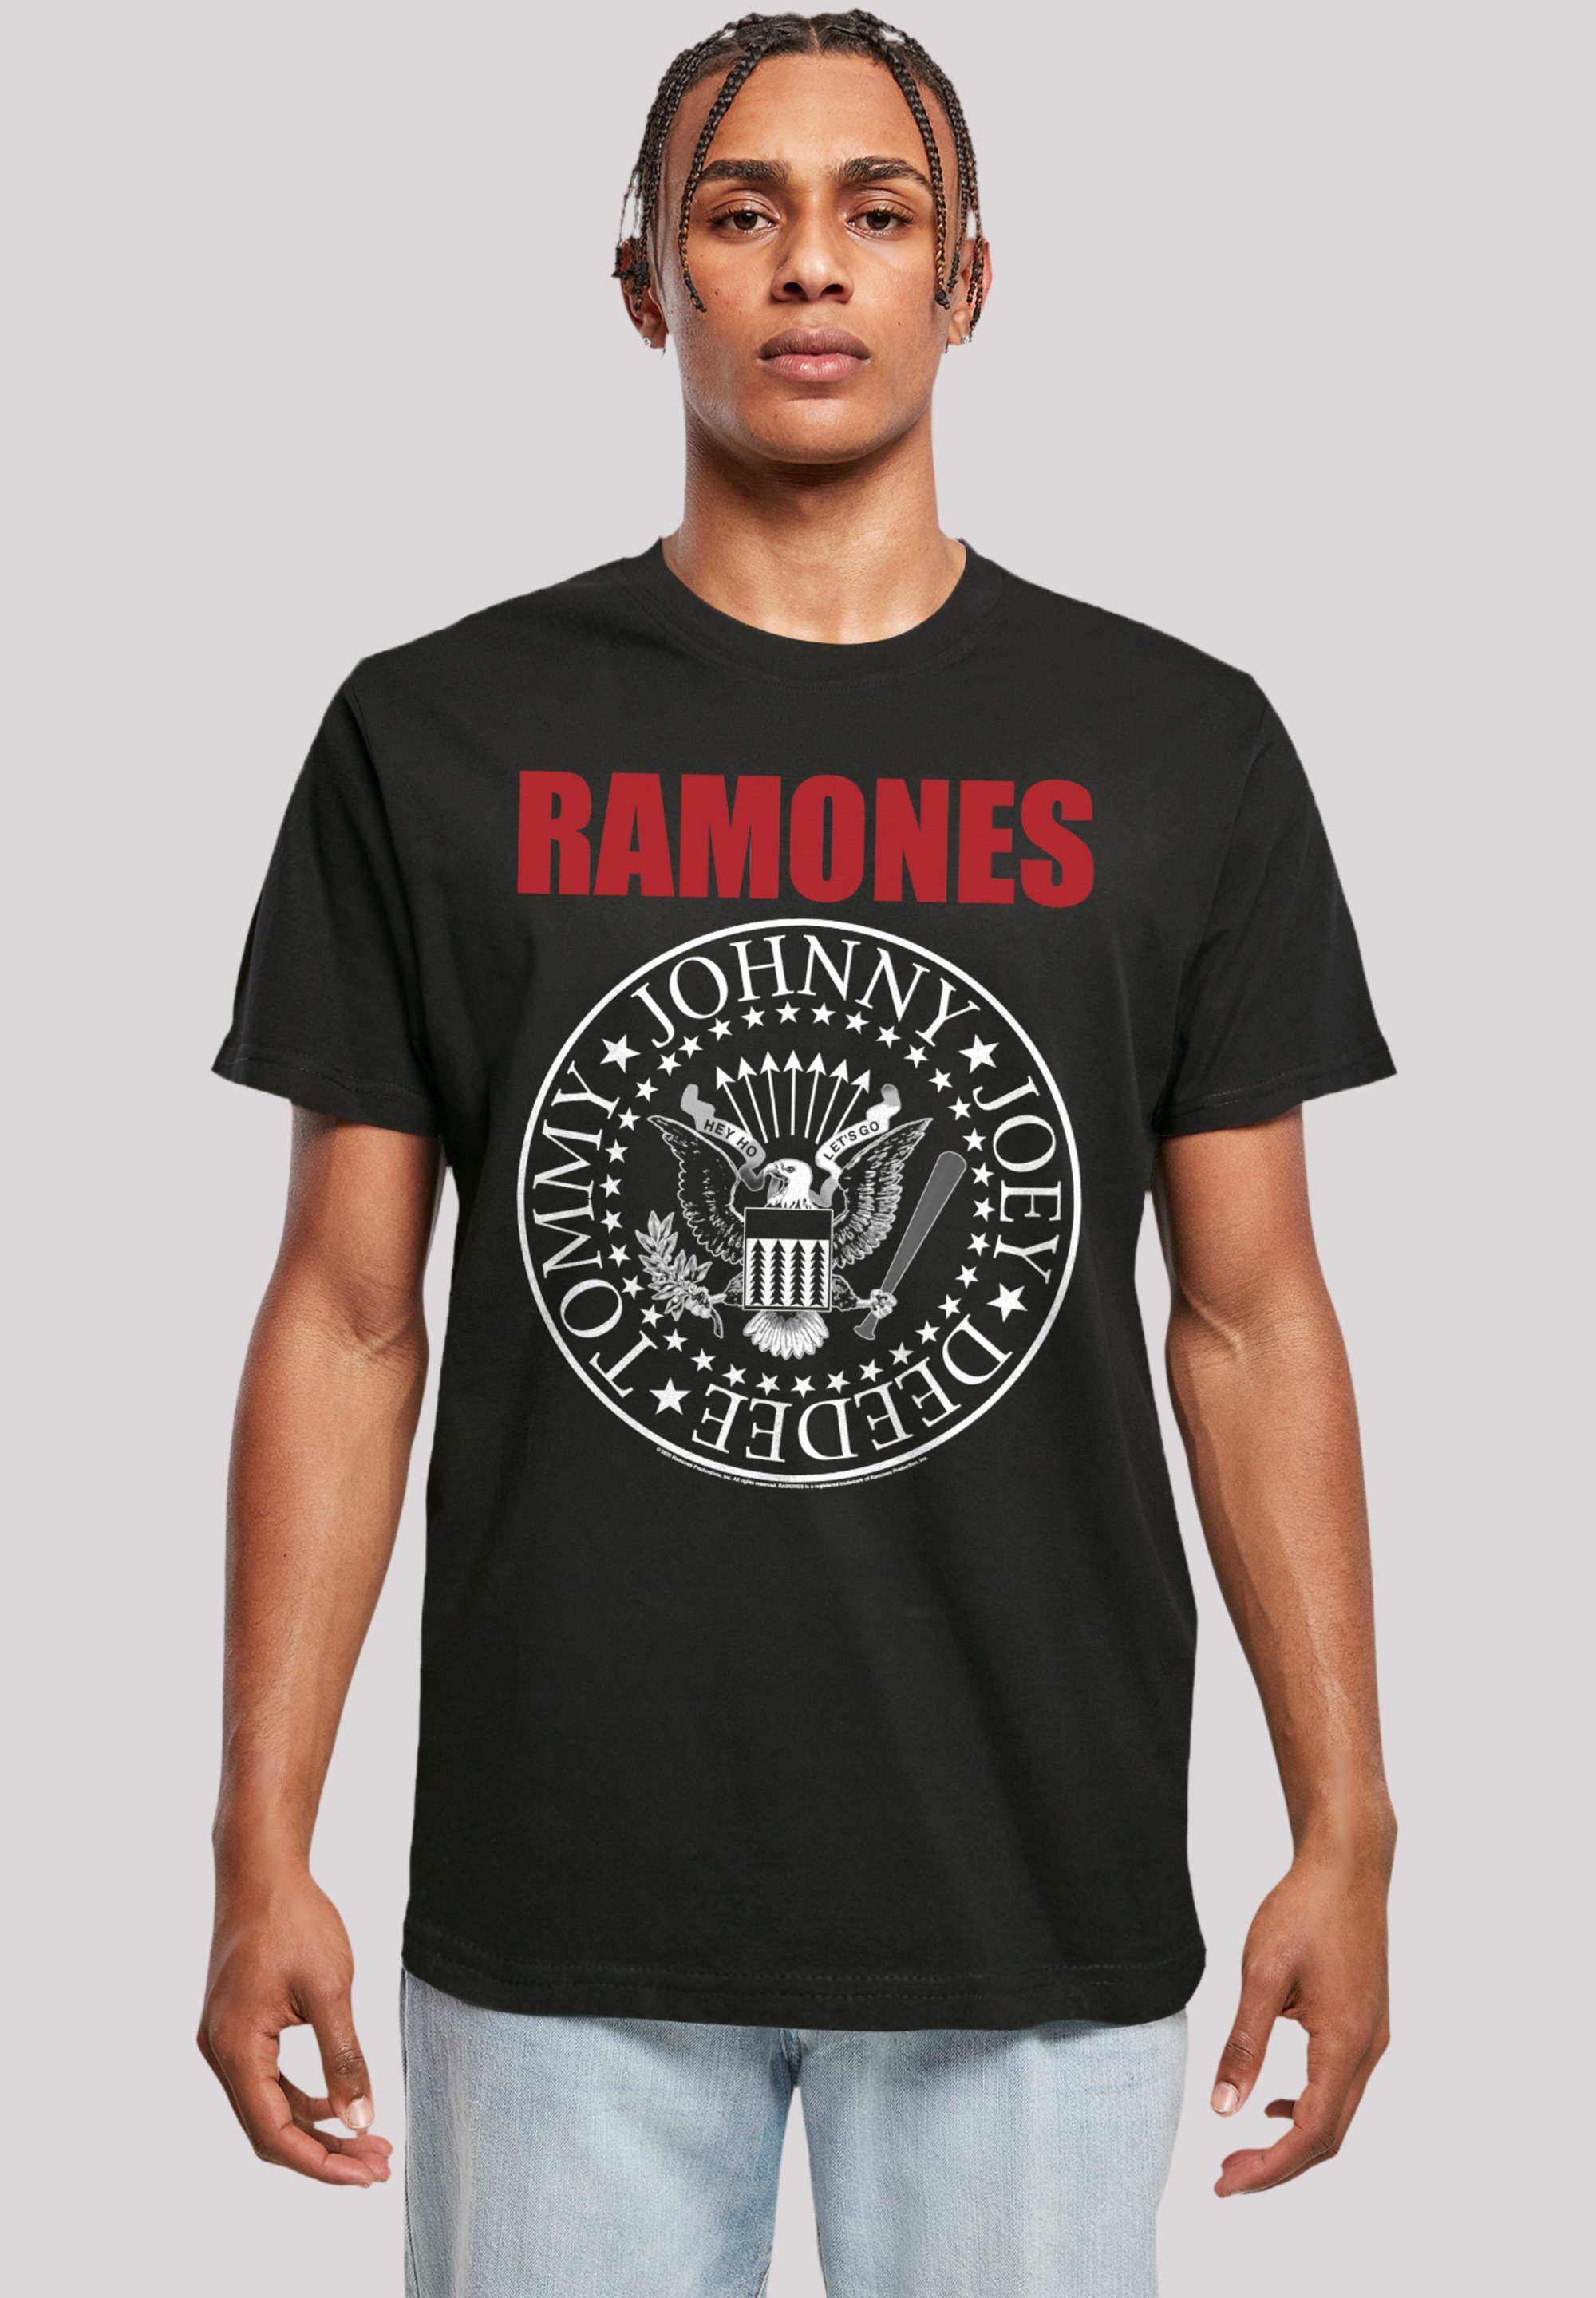 Saum Rock-Musik, Doppelnähte Red am Text am Musik Premium und Qualität, Hals Band, F4NT4STIC Seal Band Rippbündchen Rock Ramones T-Shirt